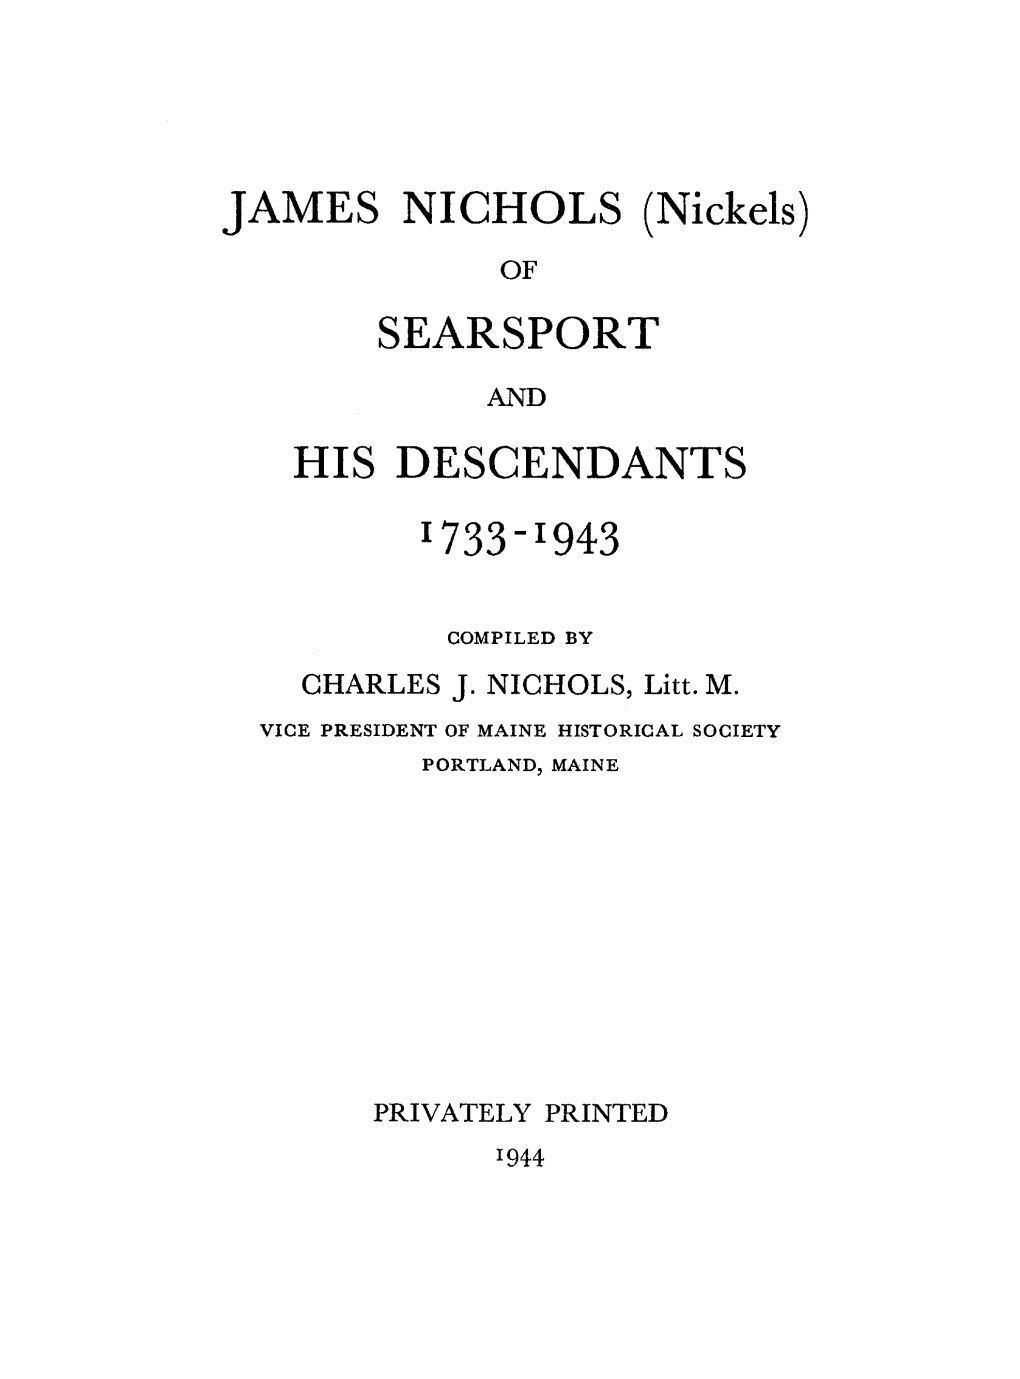 JAMES NICHOLS (Nickels) SEARSPORT HIS DESCENDANTS